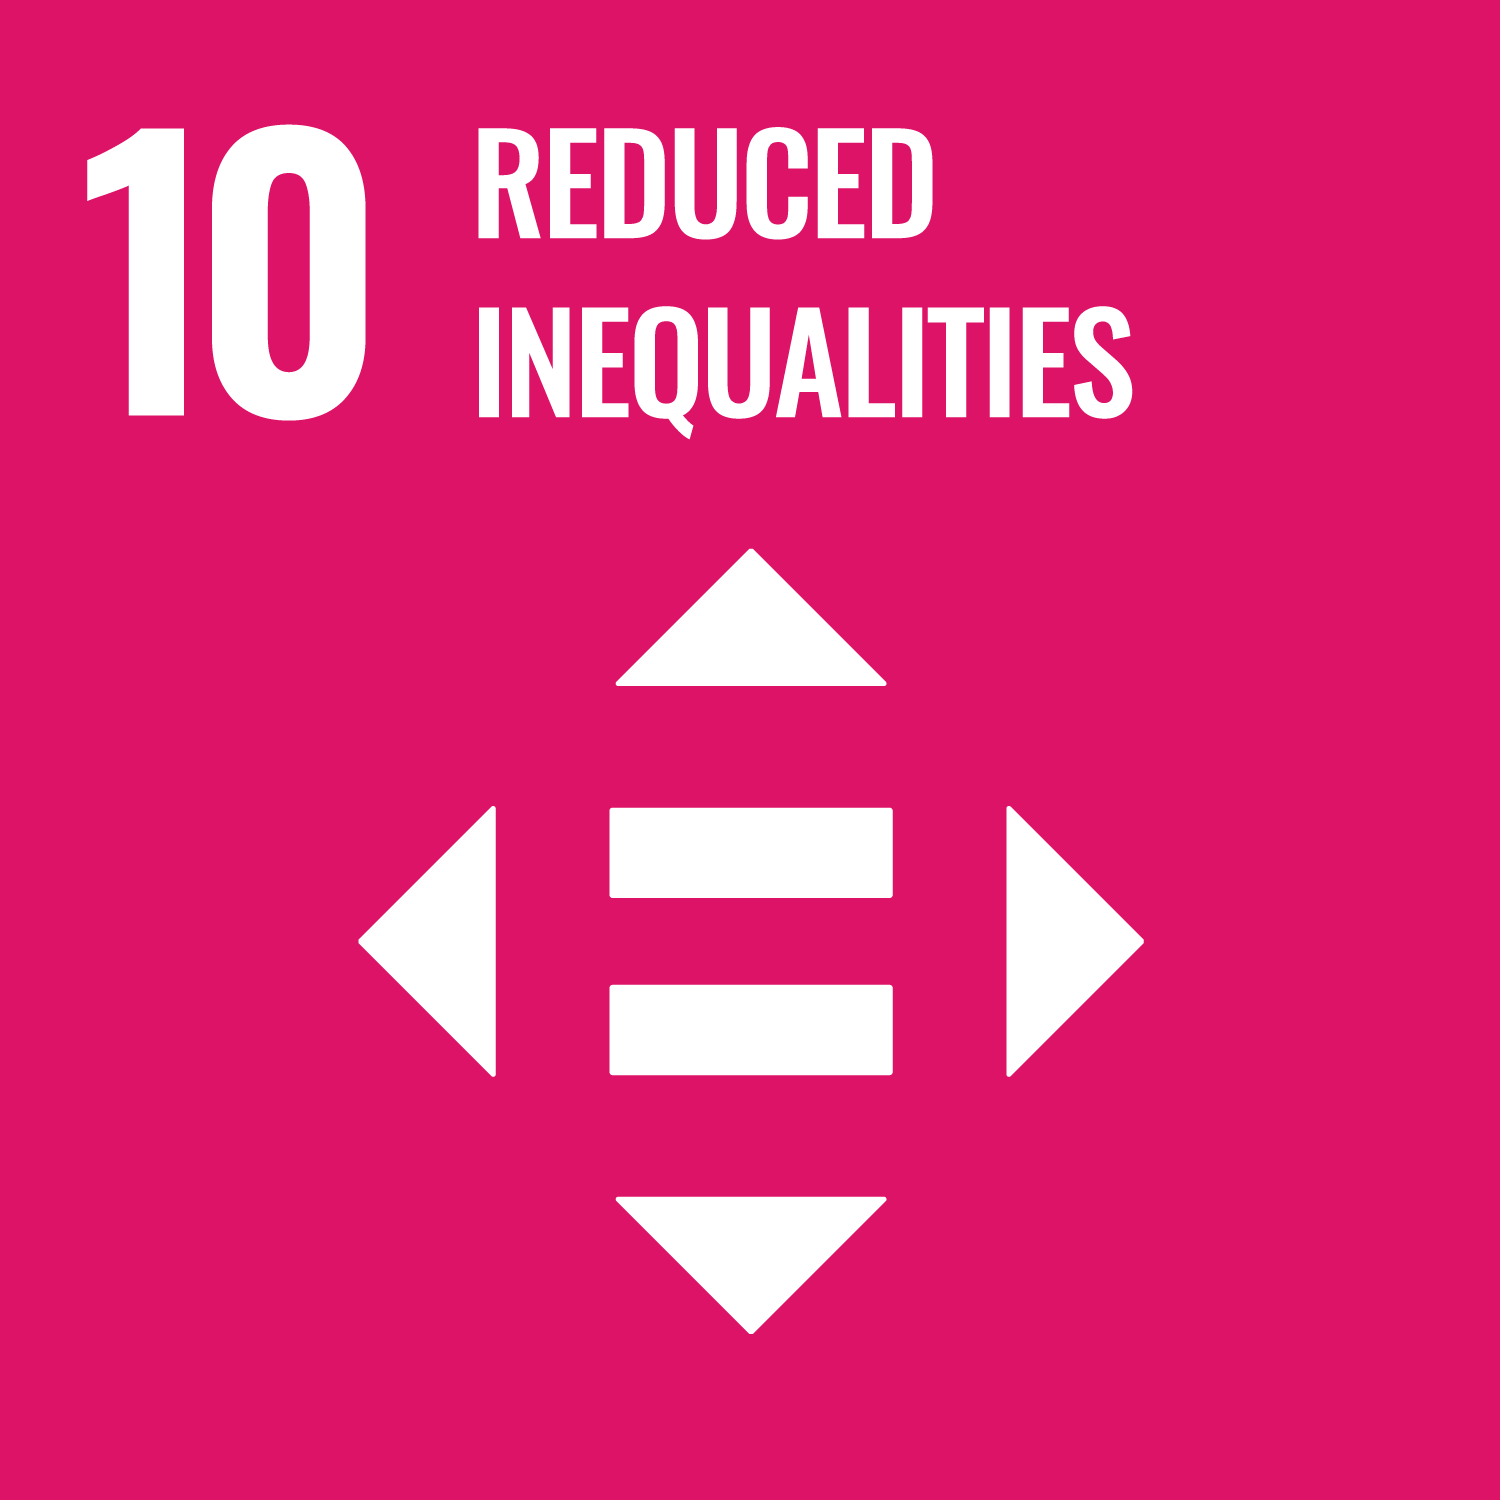 reduced-inequalities